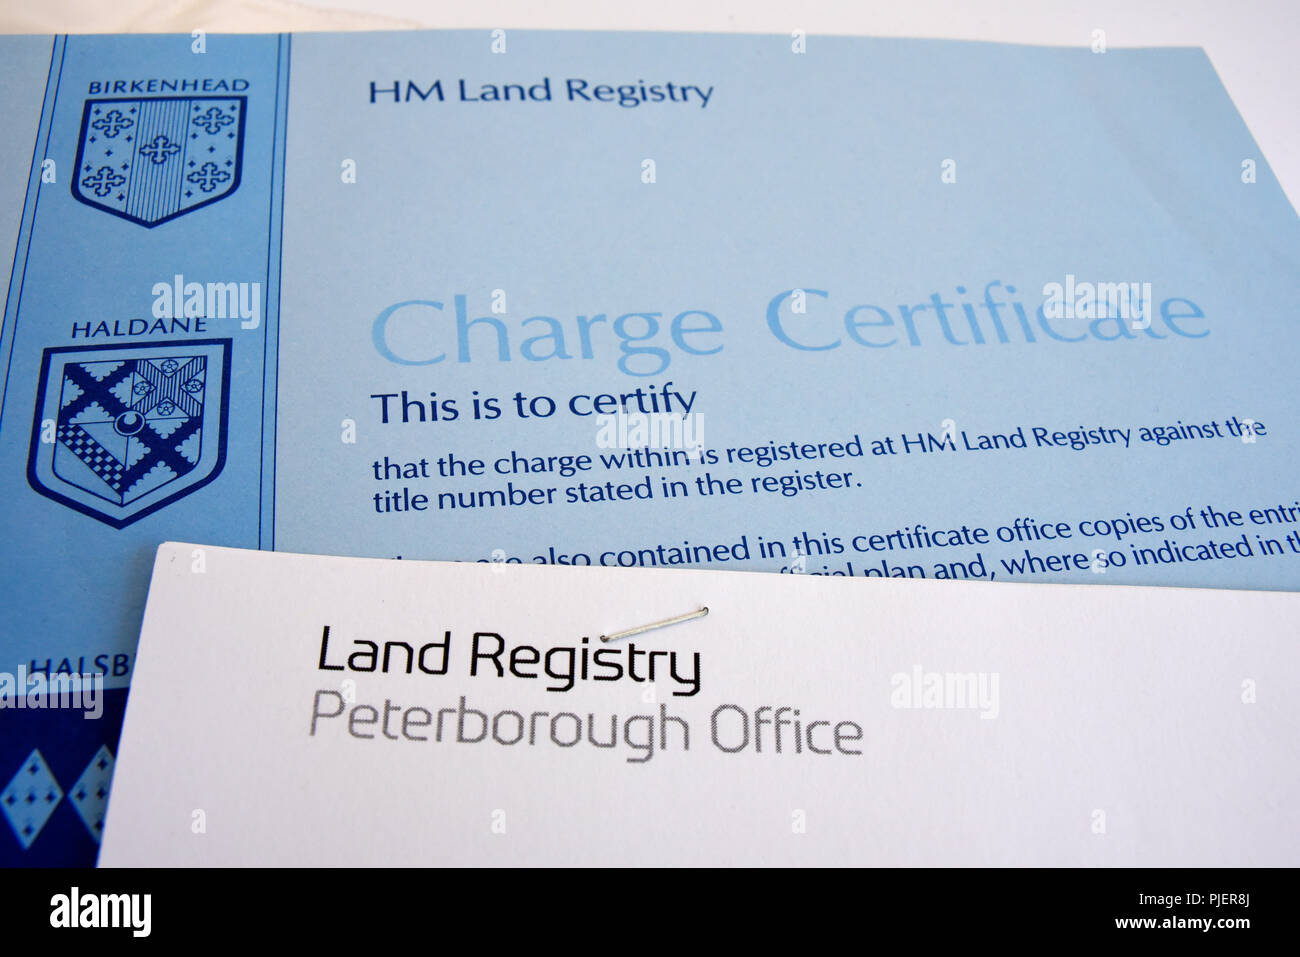 HM Land Registry document, paperwork. UK British charge certificate. Birkenhead, Haldane crest. Peterborough Office. Papers Stock Photo